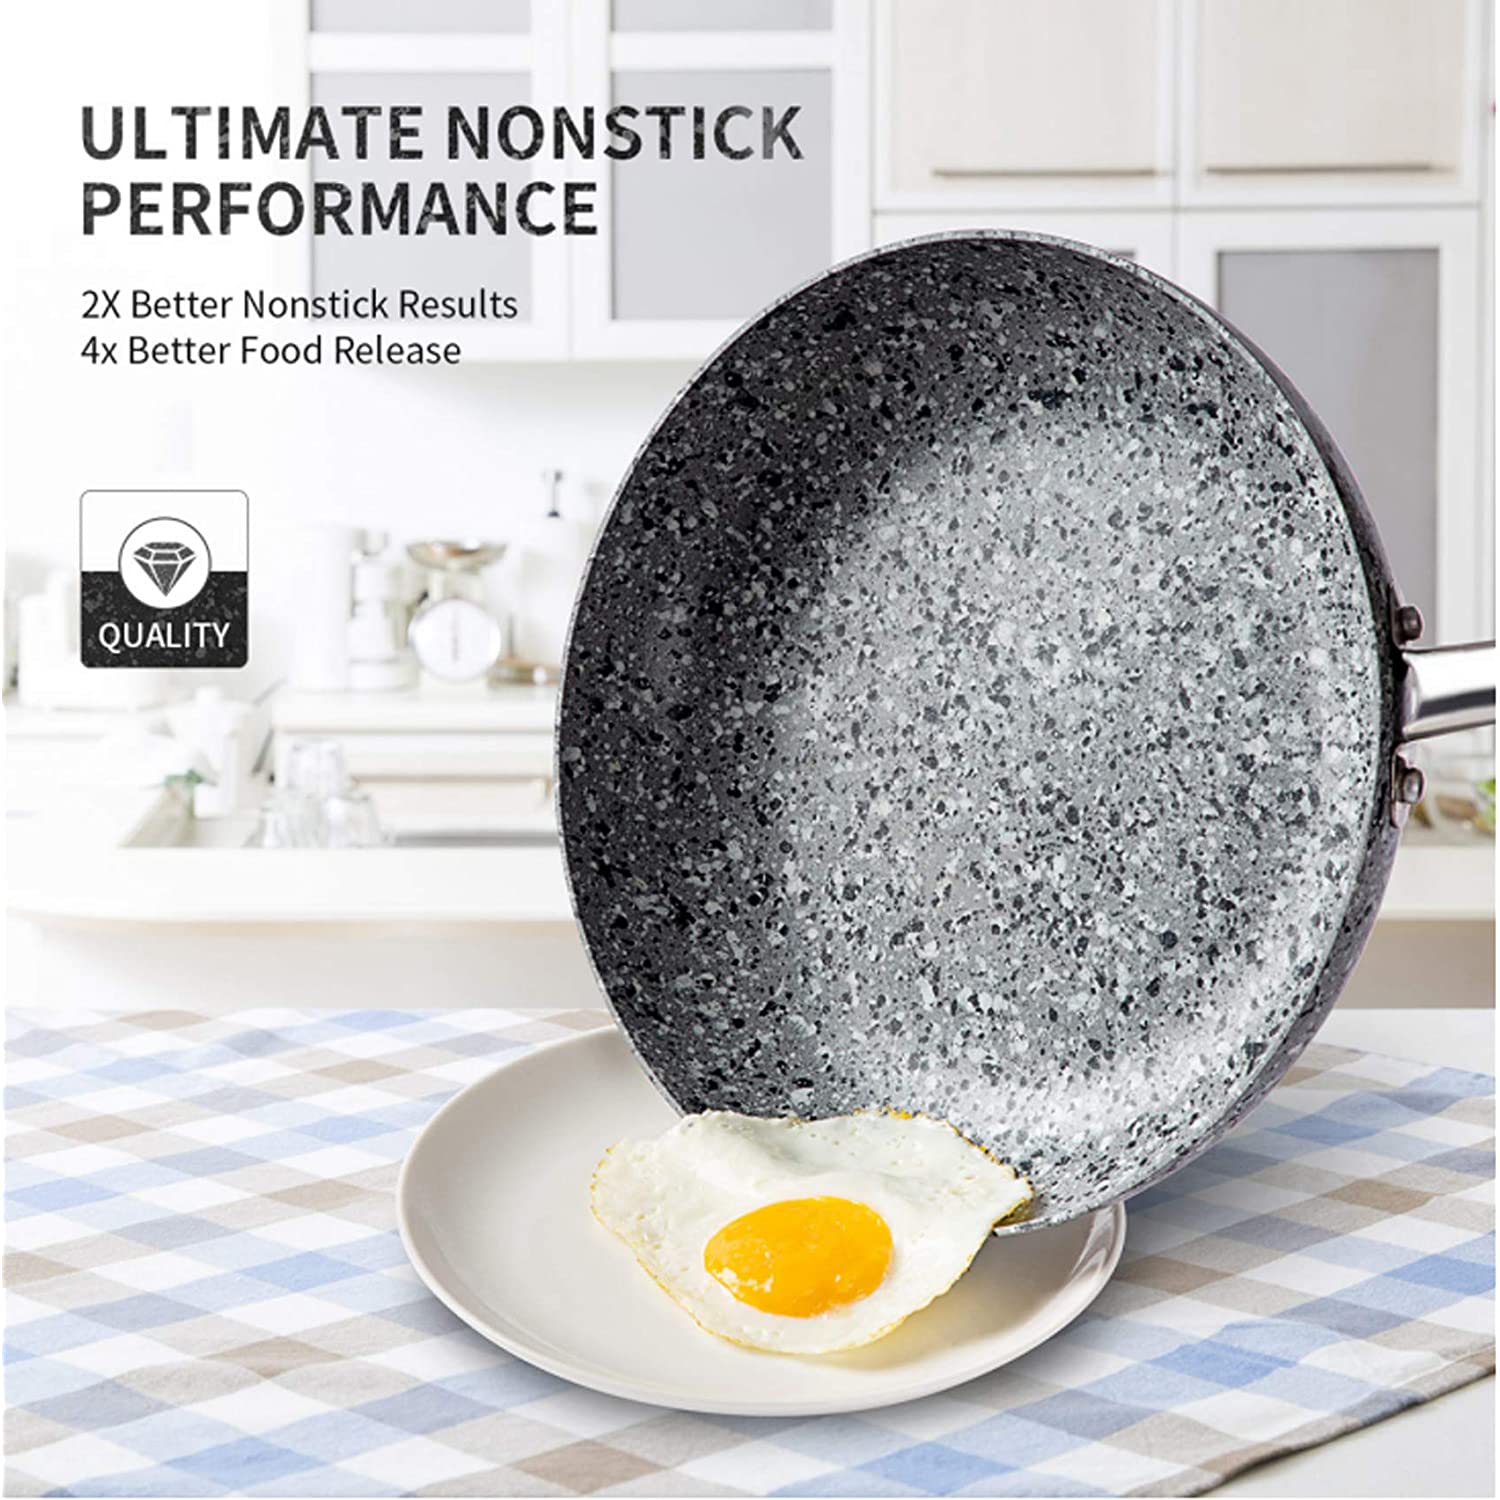 Gotham Steel Pro Ultra Ceramic 2x 15 Piece Nonstick Cookware Set with Utensils - Black